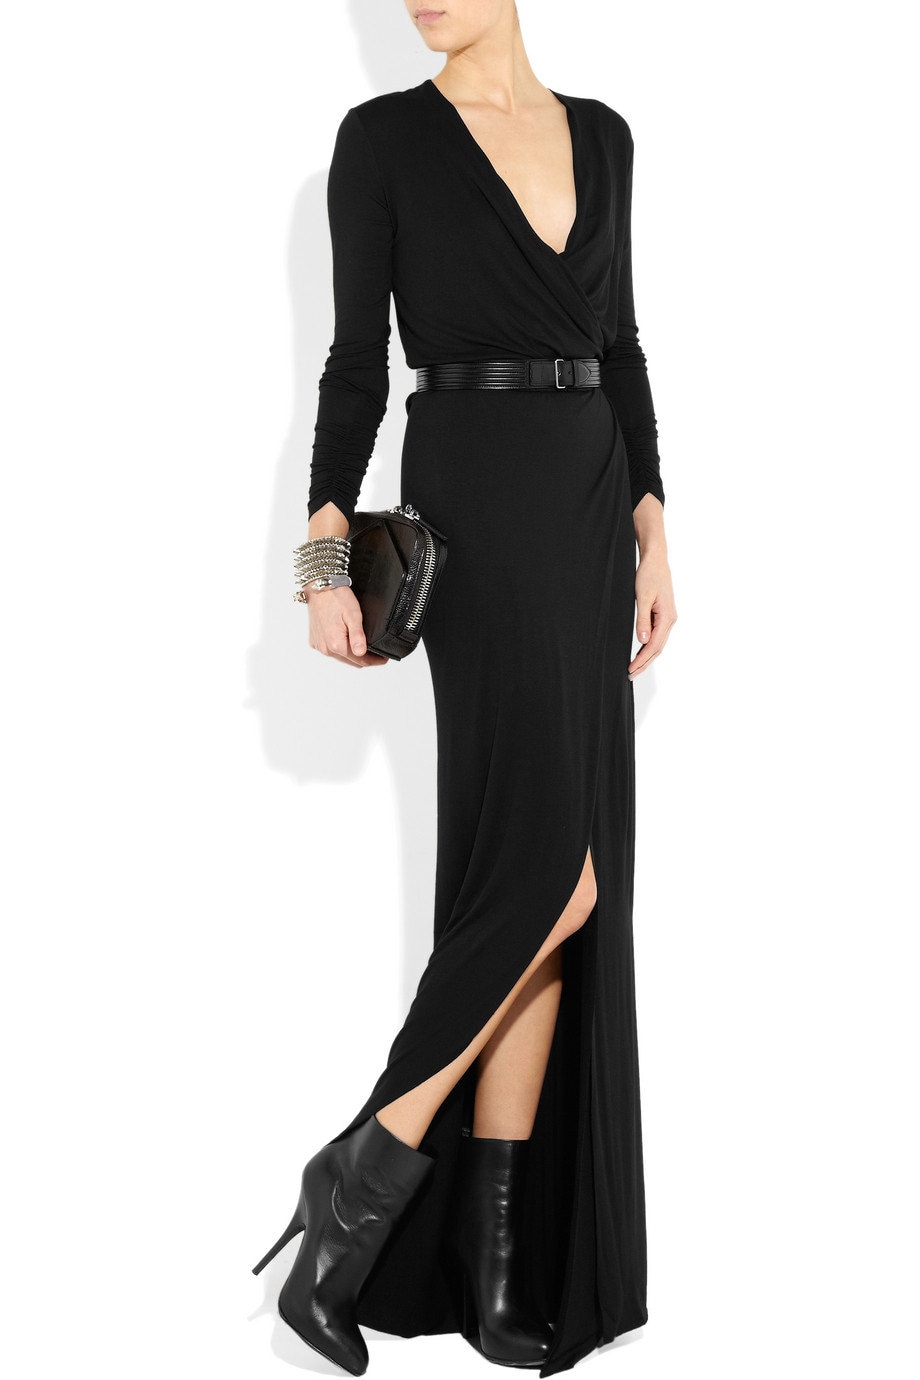  Formal  wrap  effect black maxi dress  Long sleeves wrap  floor